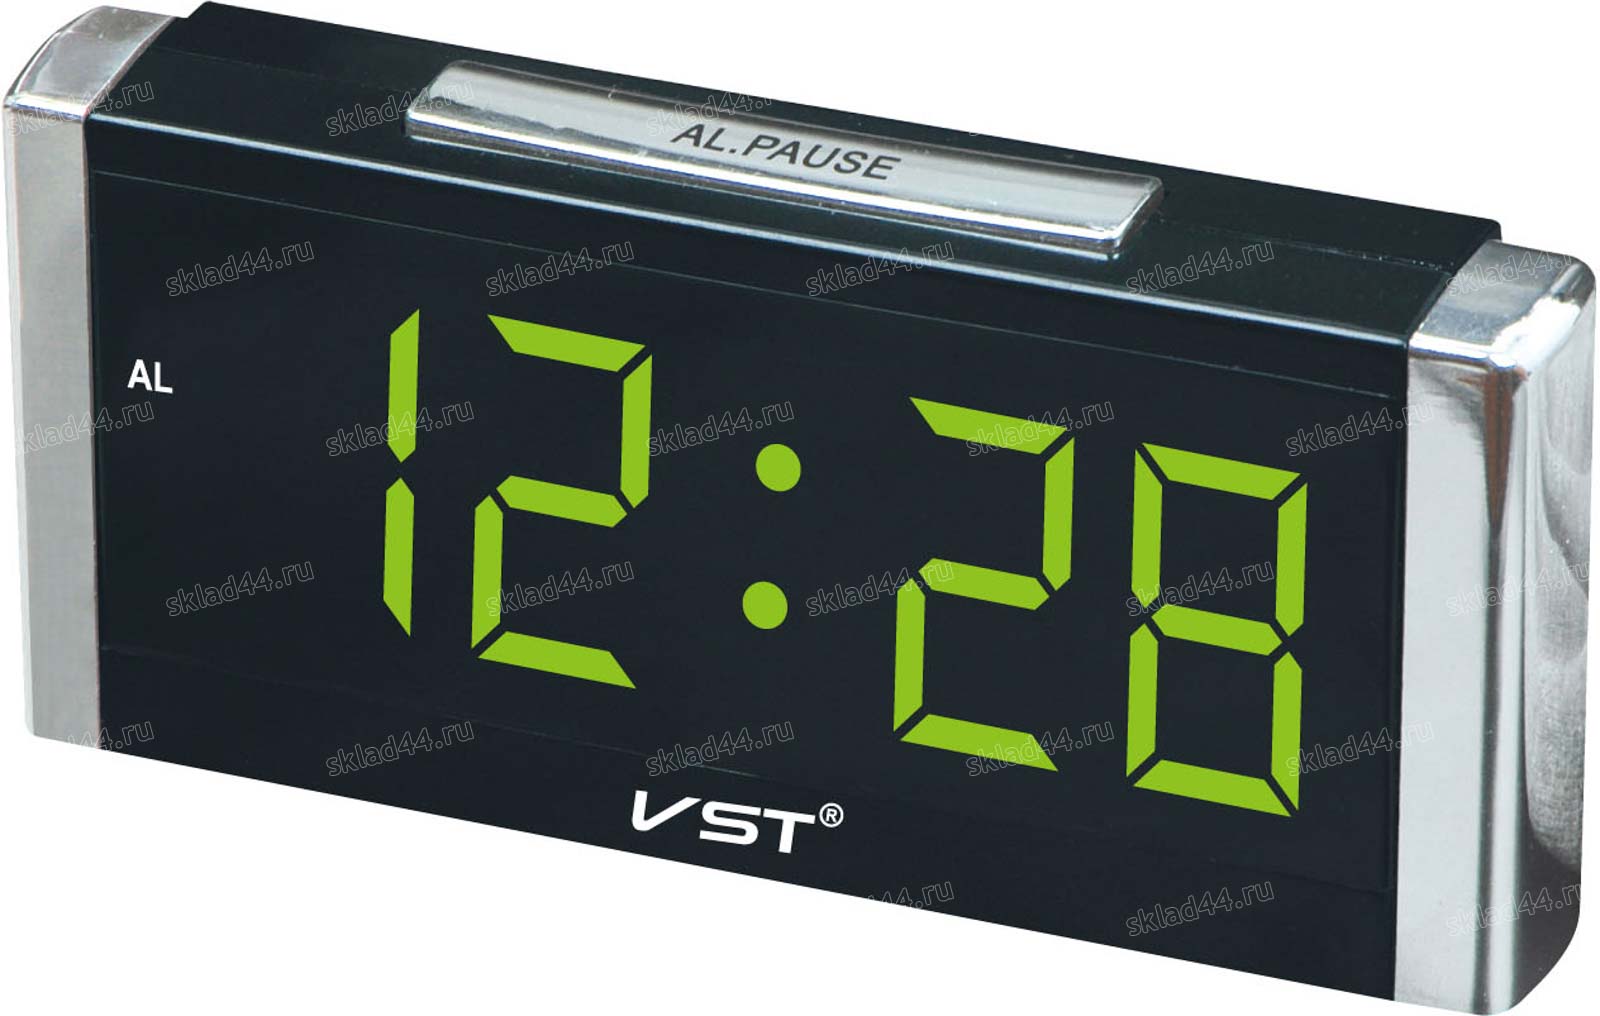 Часы vst видео. Часы VST 731. Электронные часы VST 731w. Vst731-1. Электронные часы VST-731w-4 (черные с ярко-зелеными цифрами).